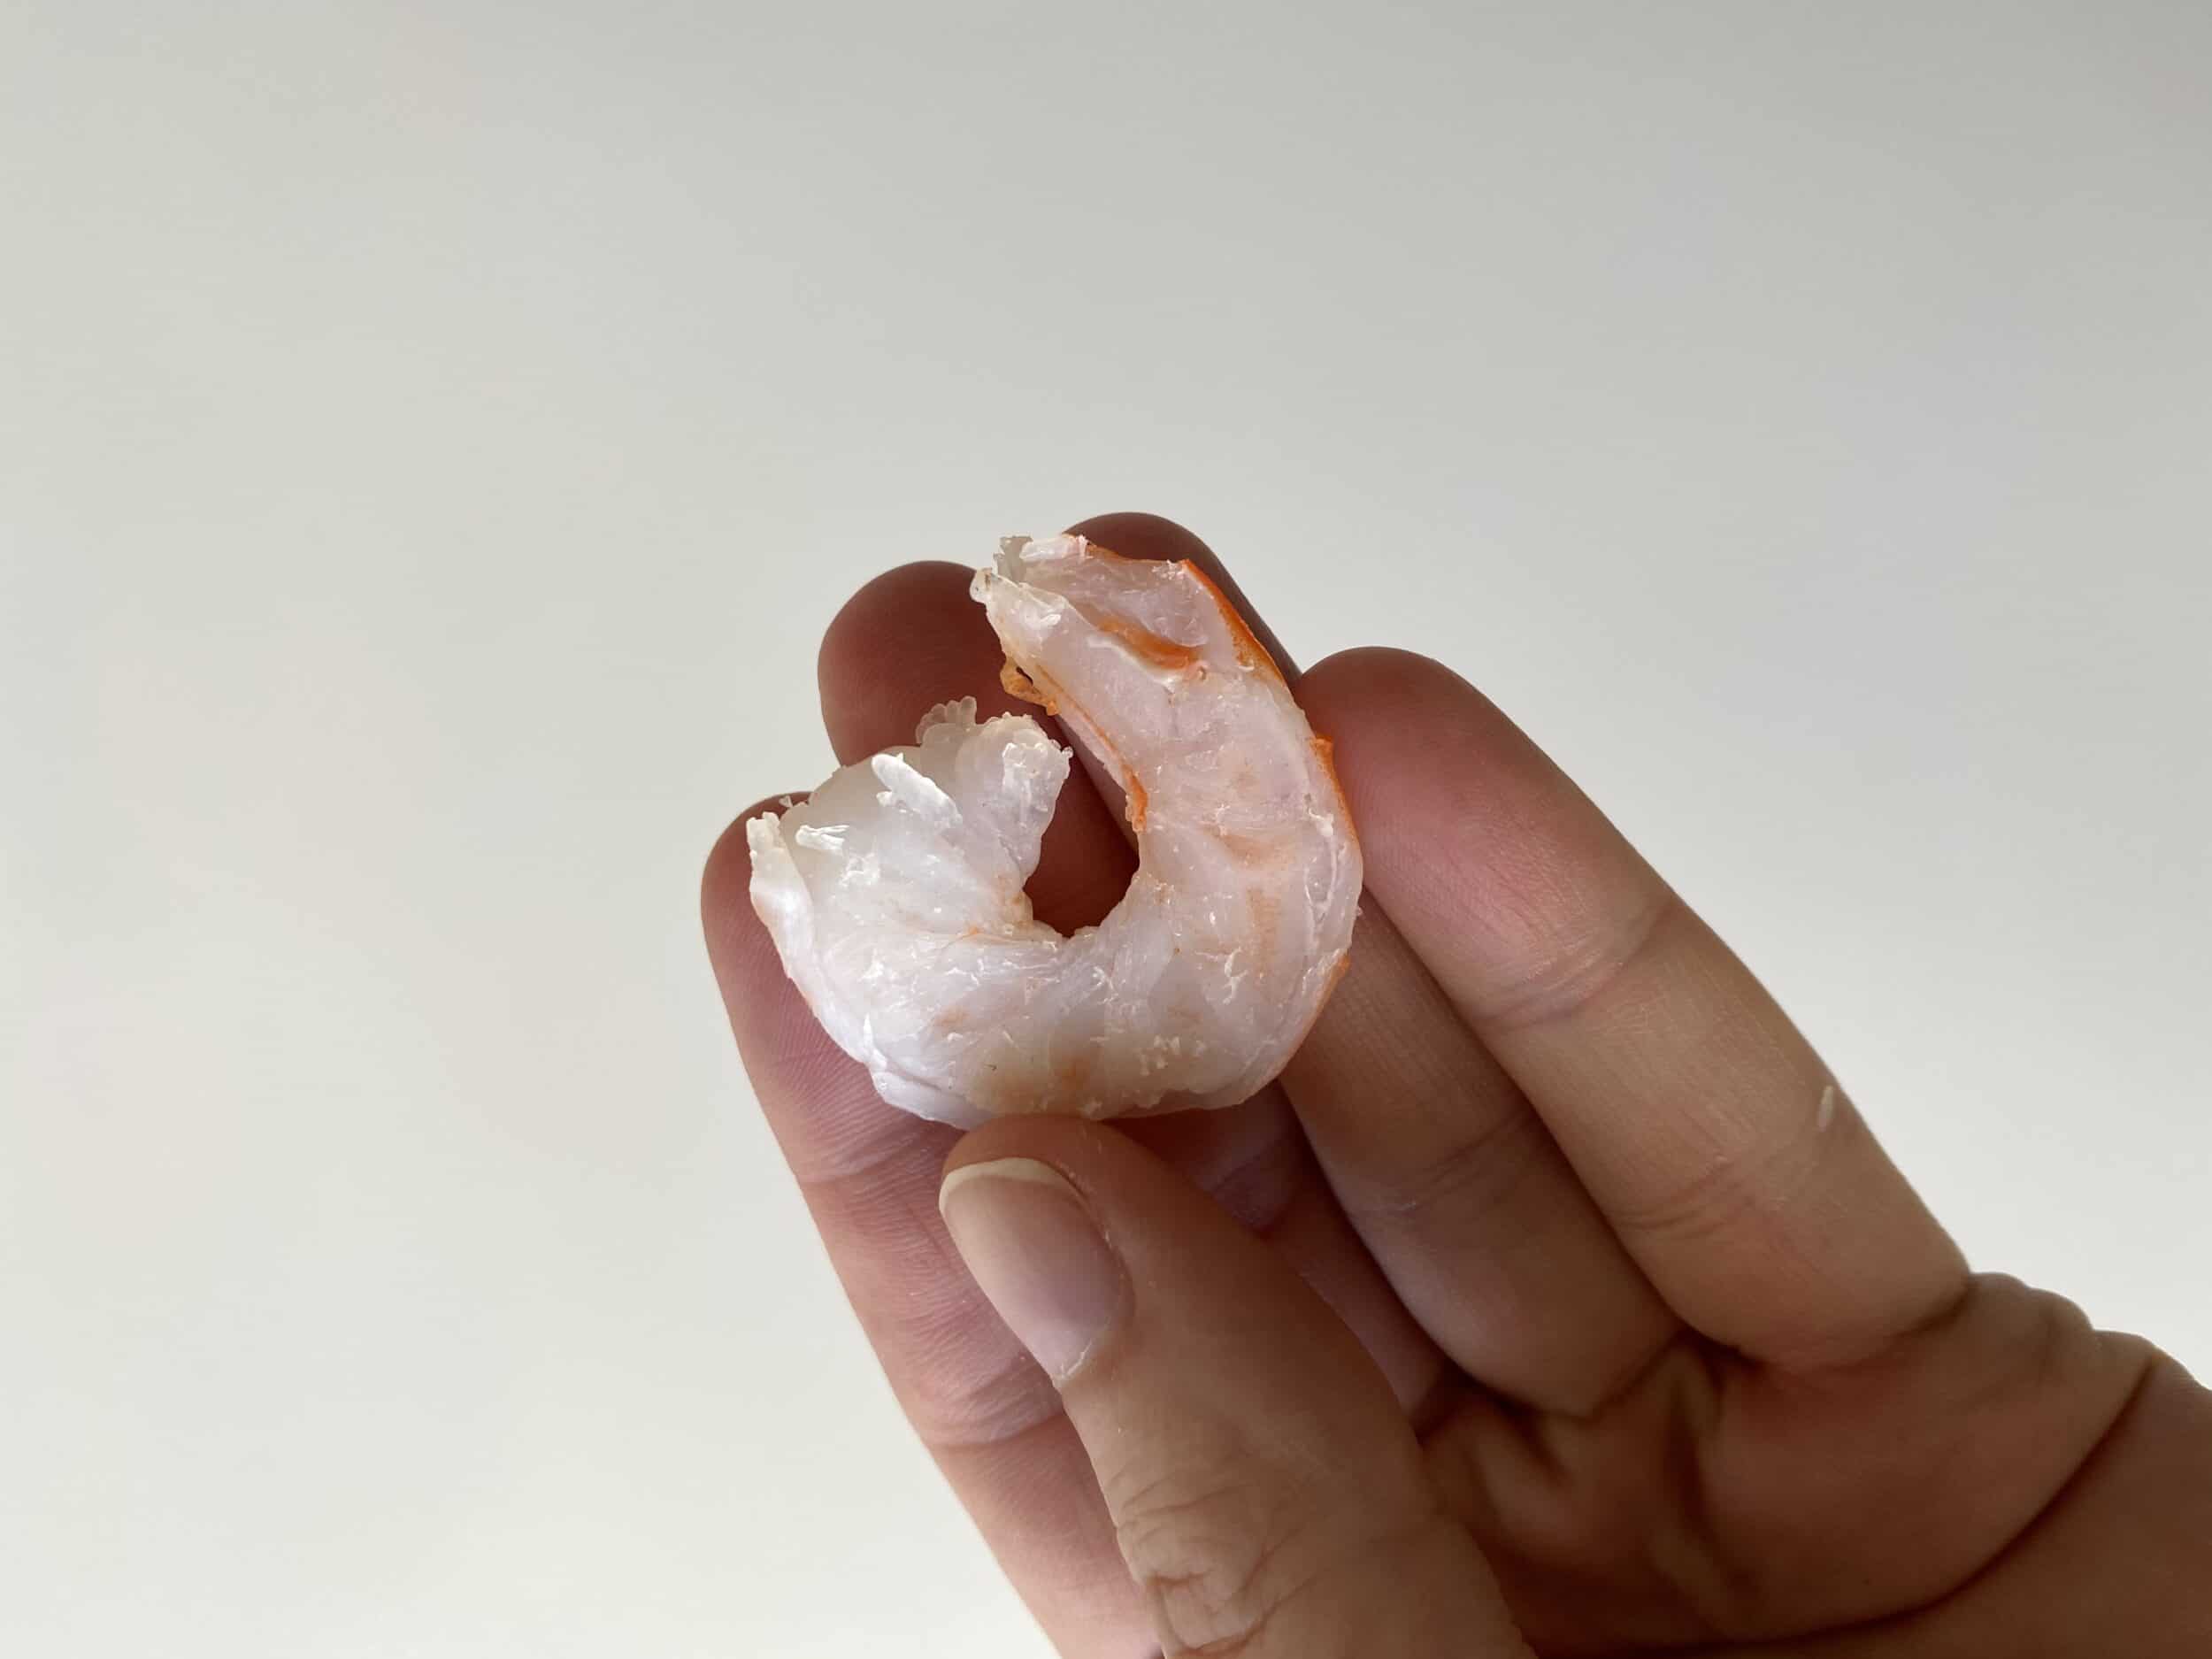 what do baby shrimp eat